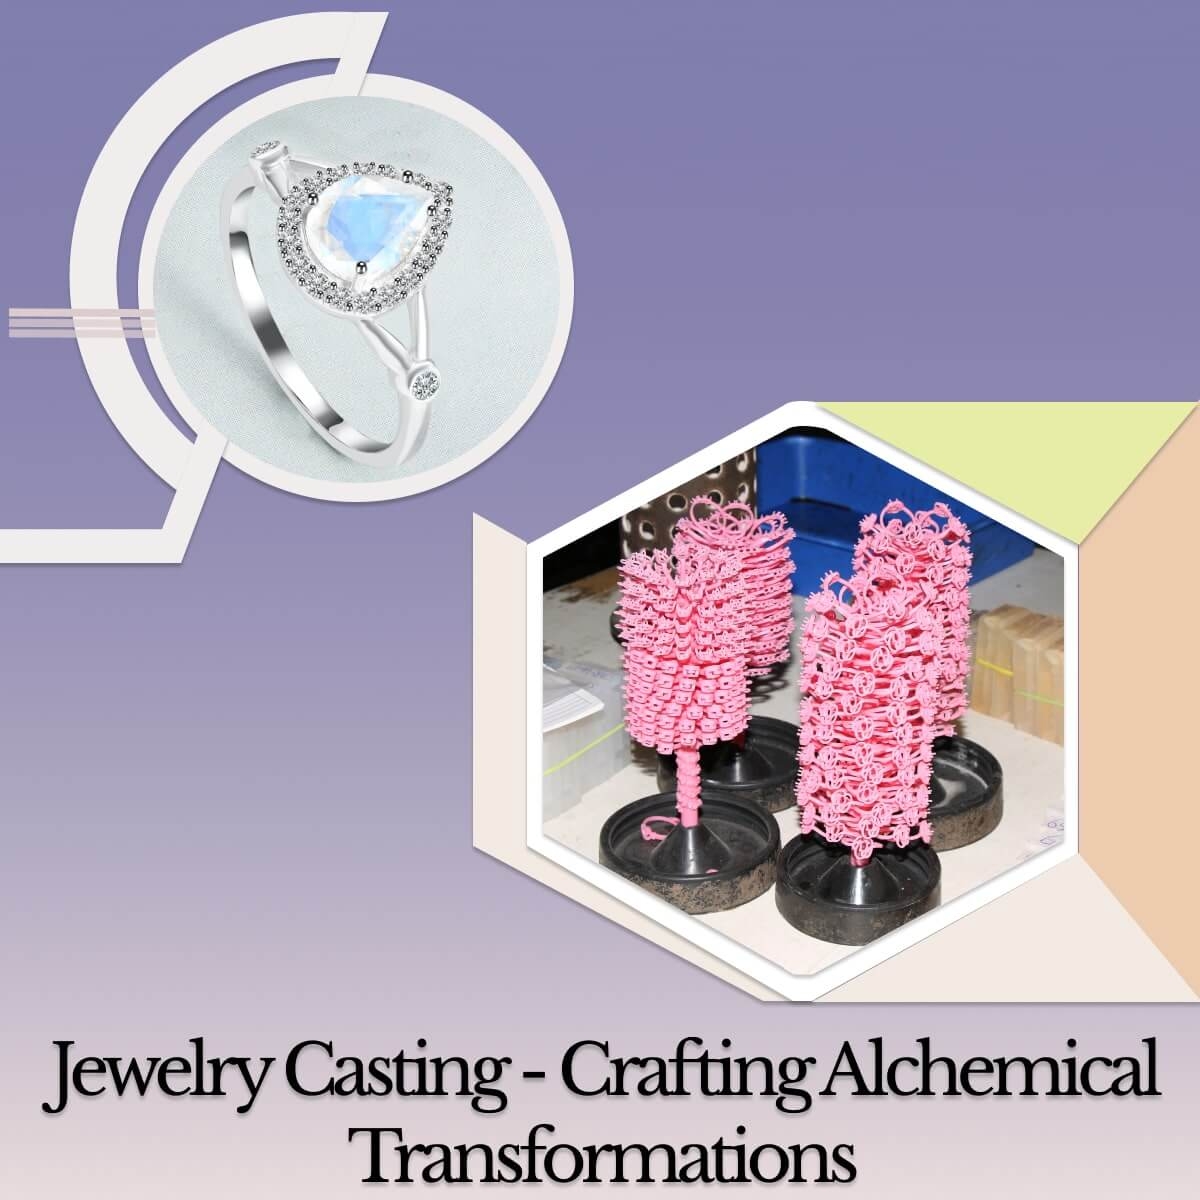 Casting Jewelry: The Alchemy of Transformation